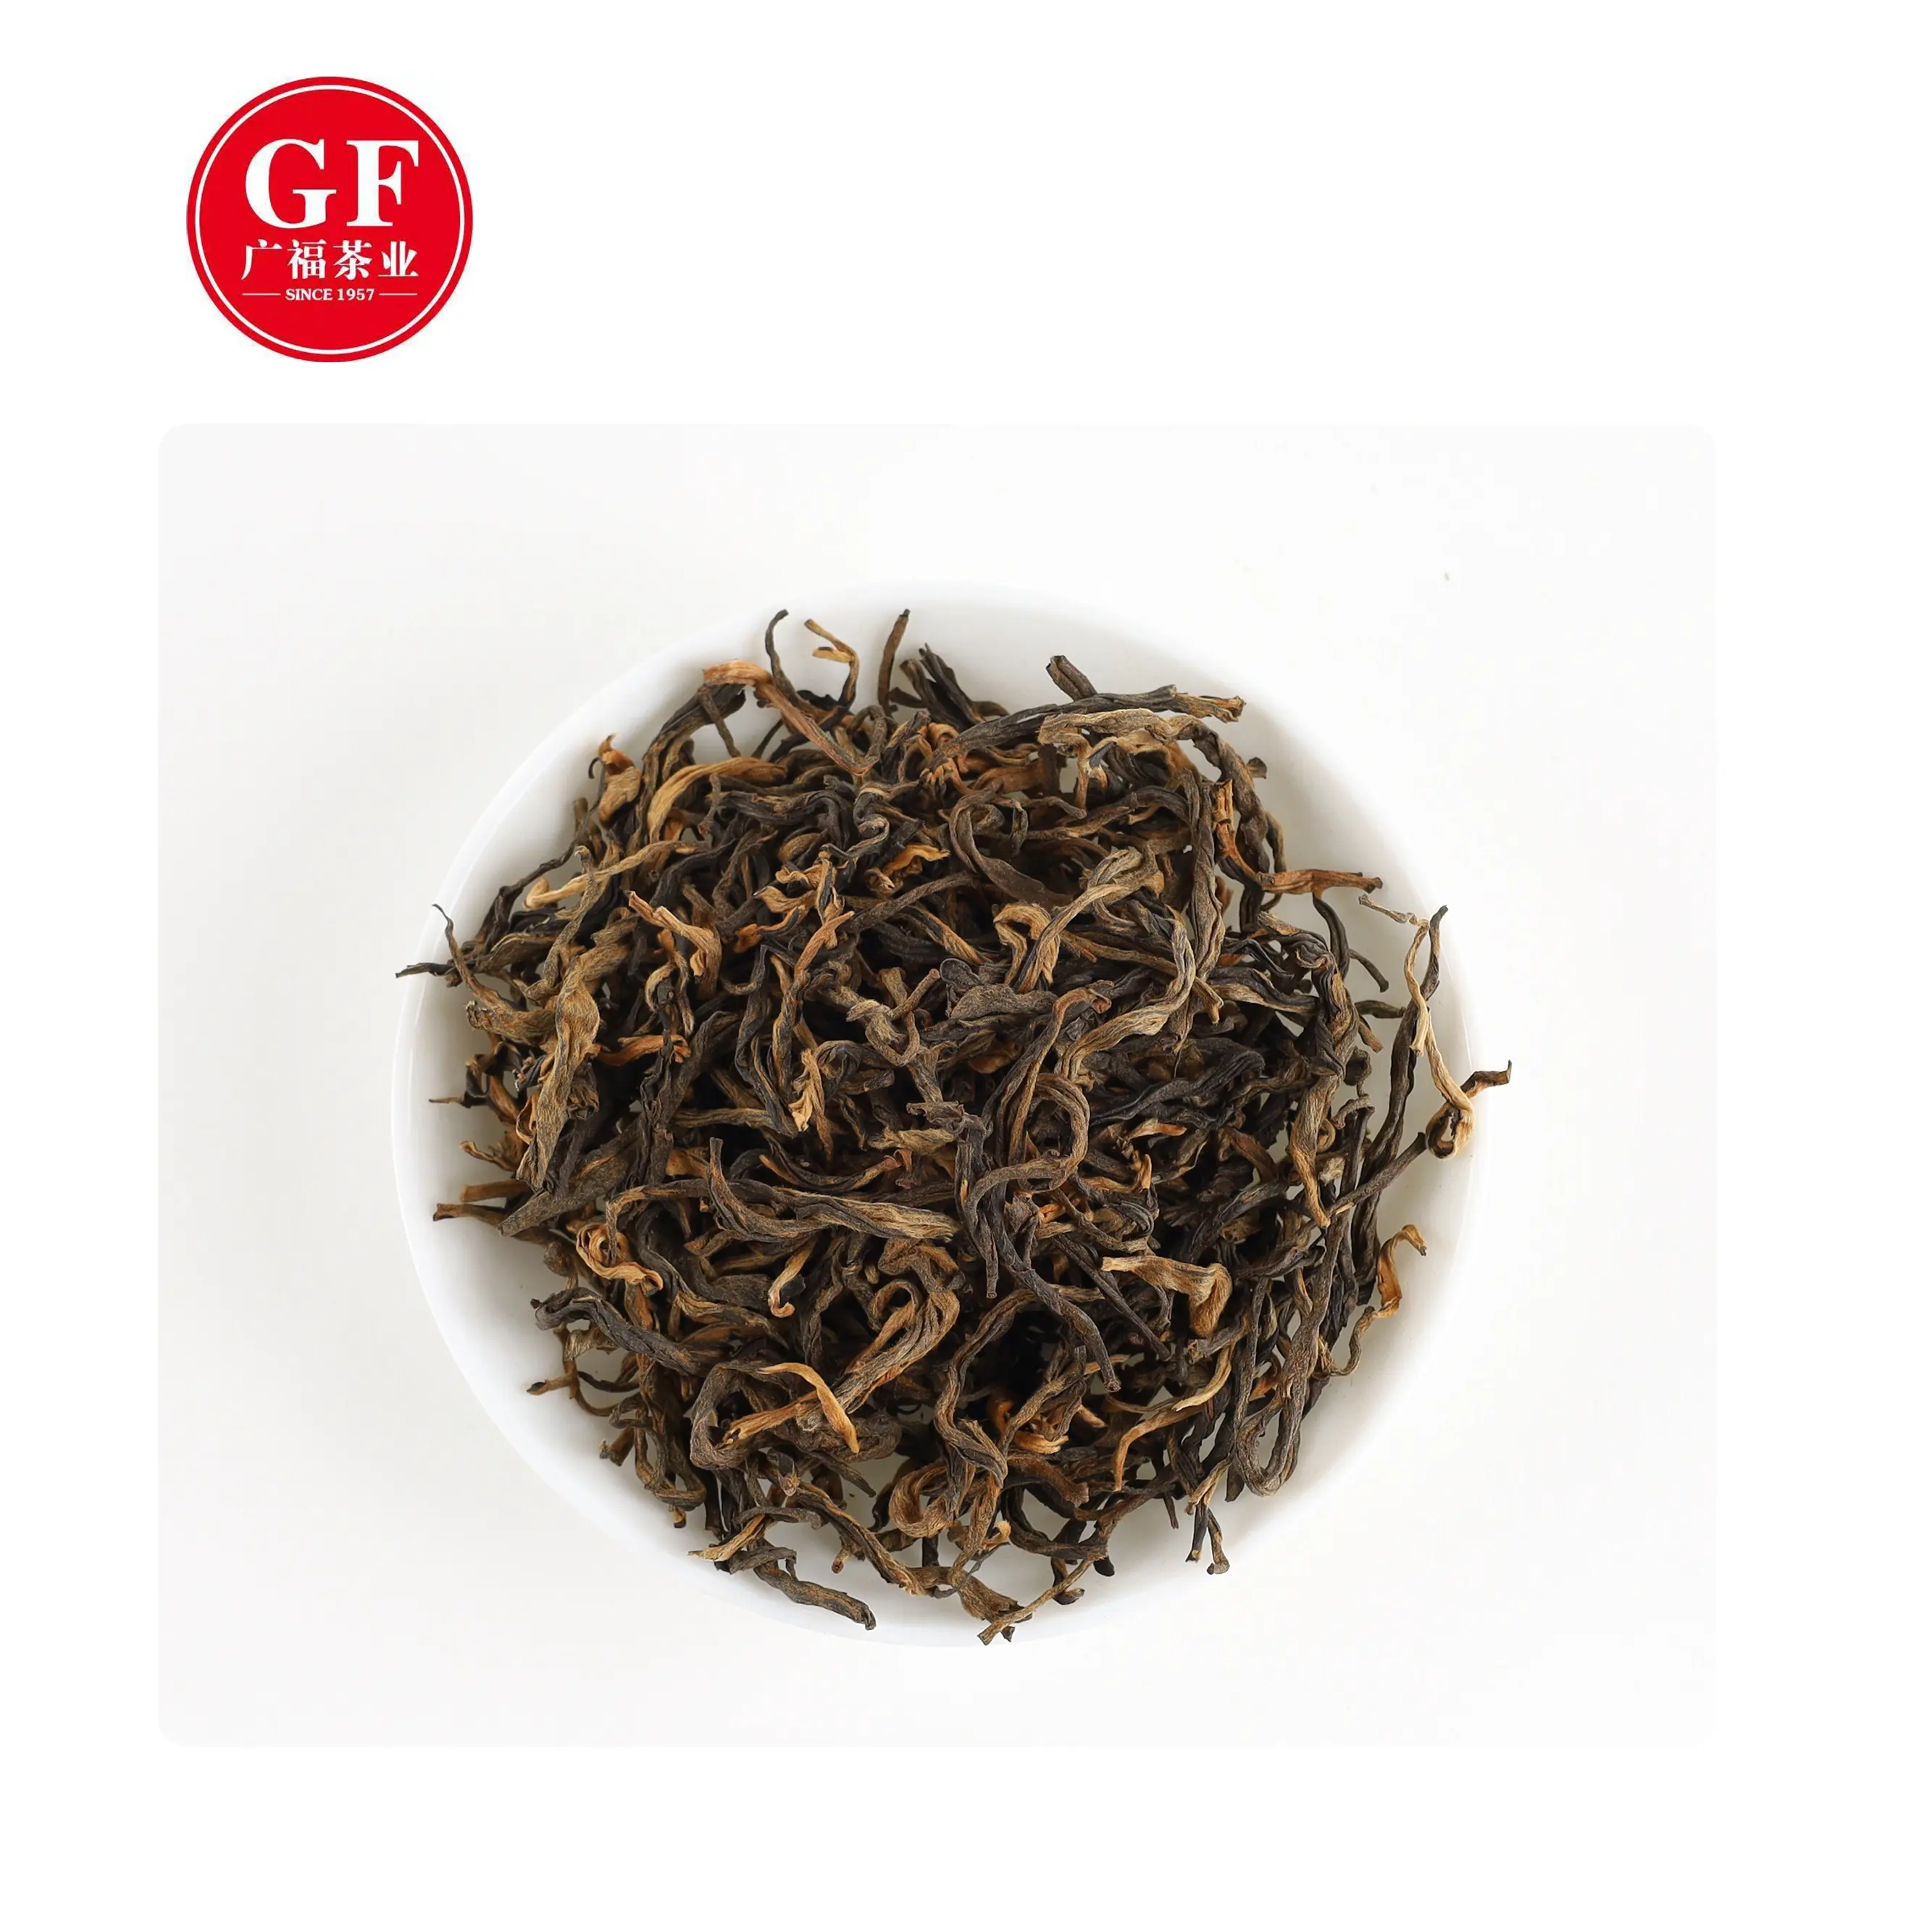 China Yunnan Black Tea Dian Hong Mao Feng For Gift Tea